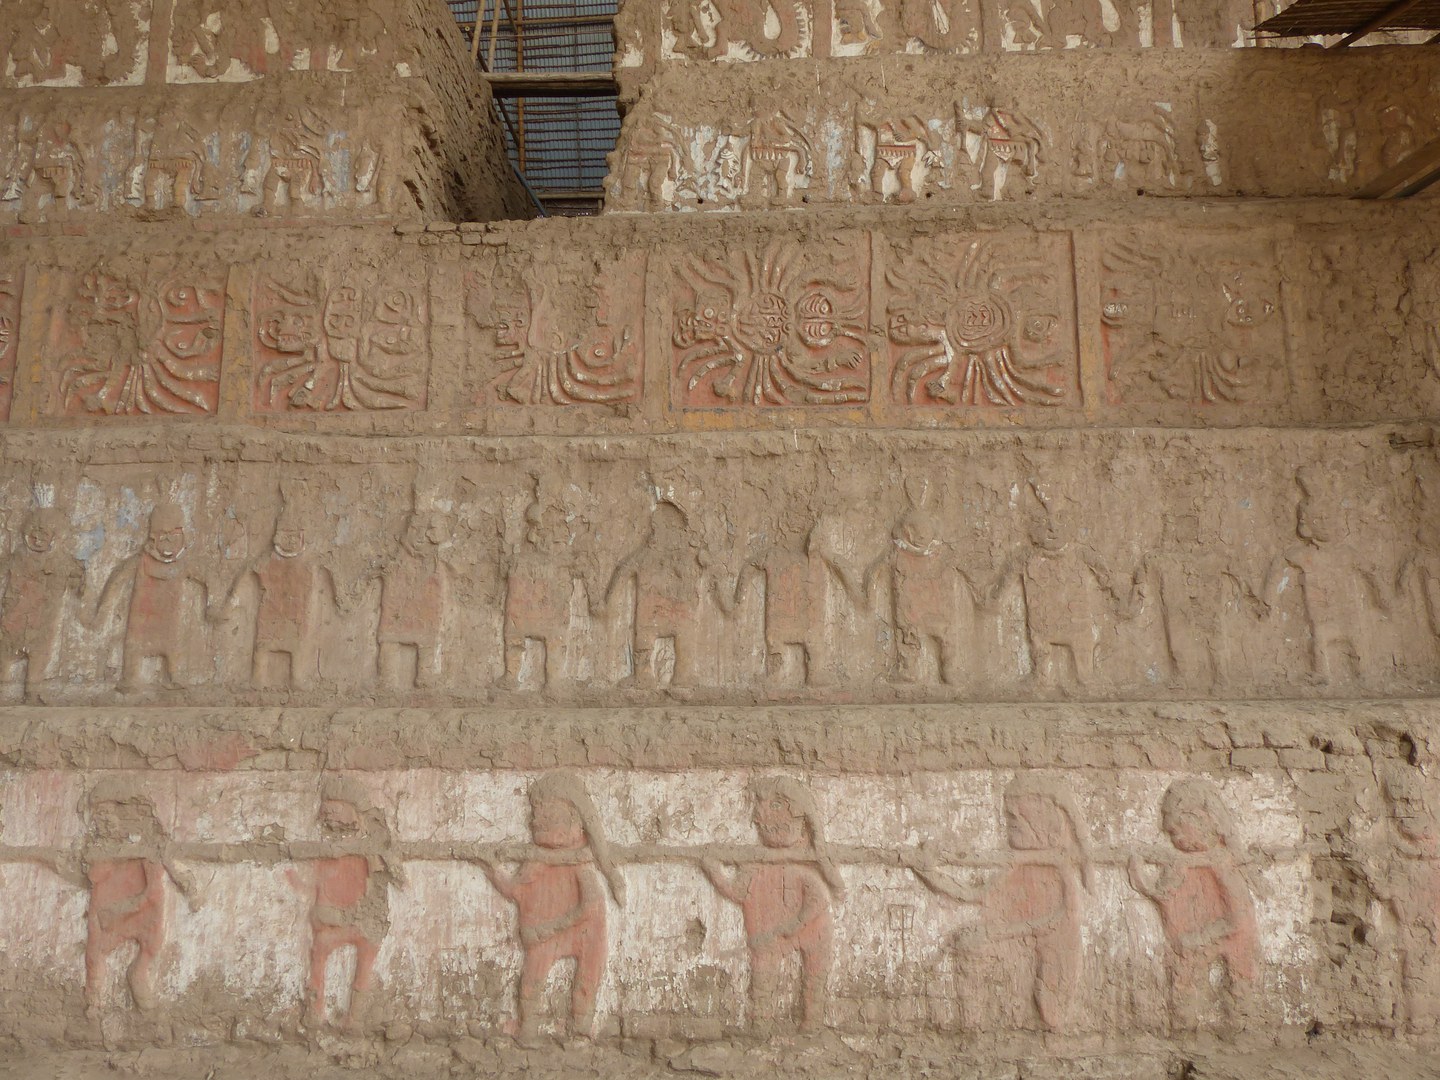 Main mural at the Huaca de la Luna (Moche archaeological culture) on the north coast of Peru.